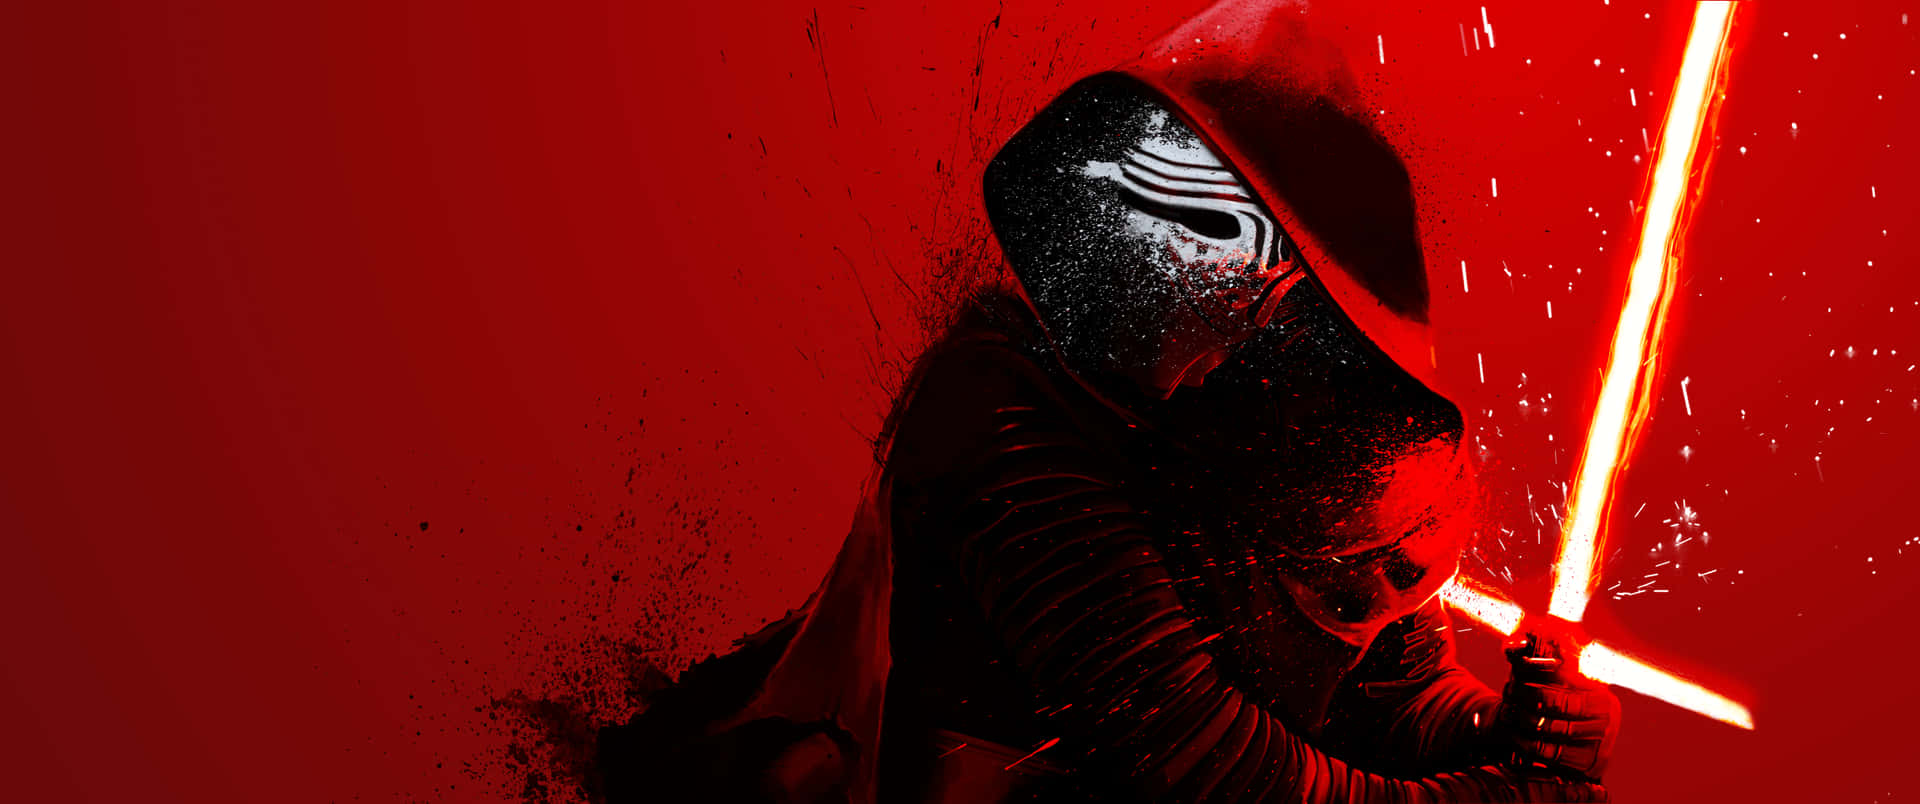 Kylo Ren From Star Wars Red Ultra Wide HD Wallpaper